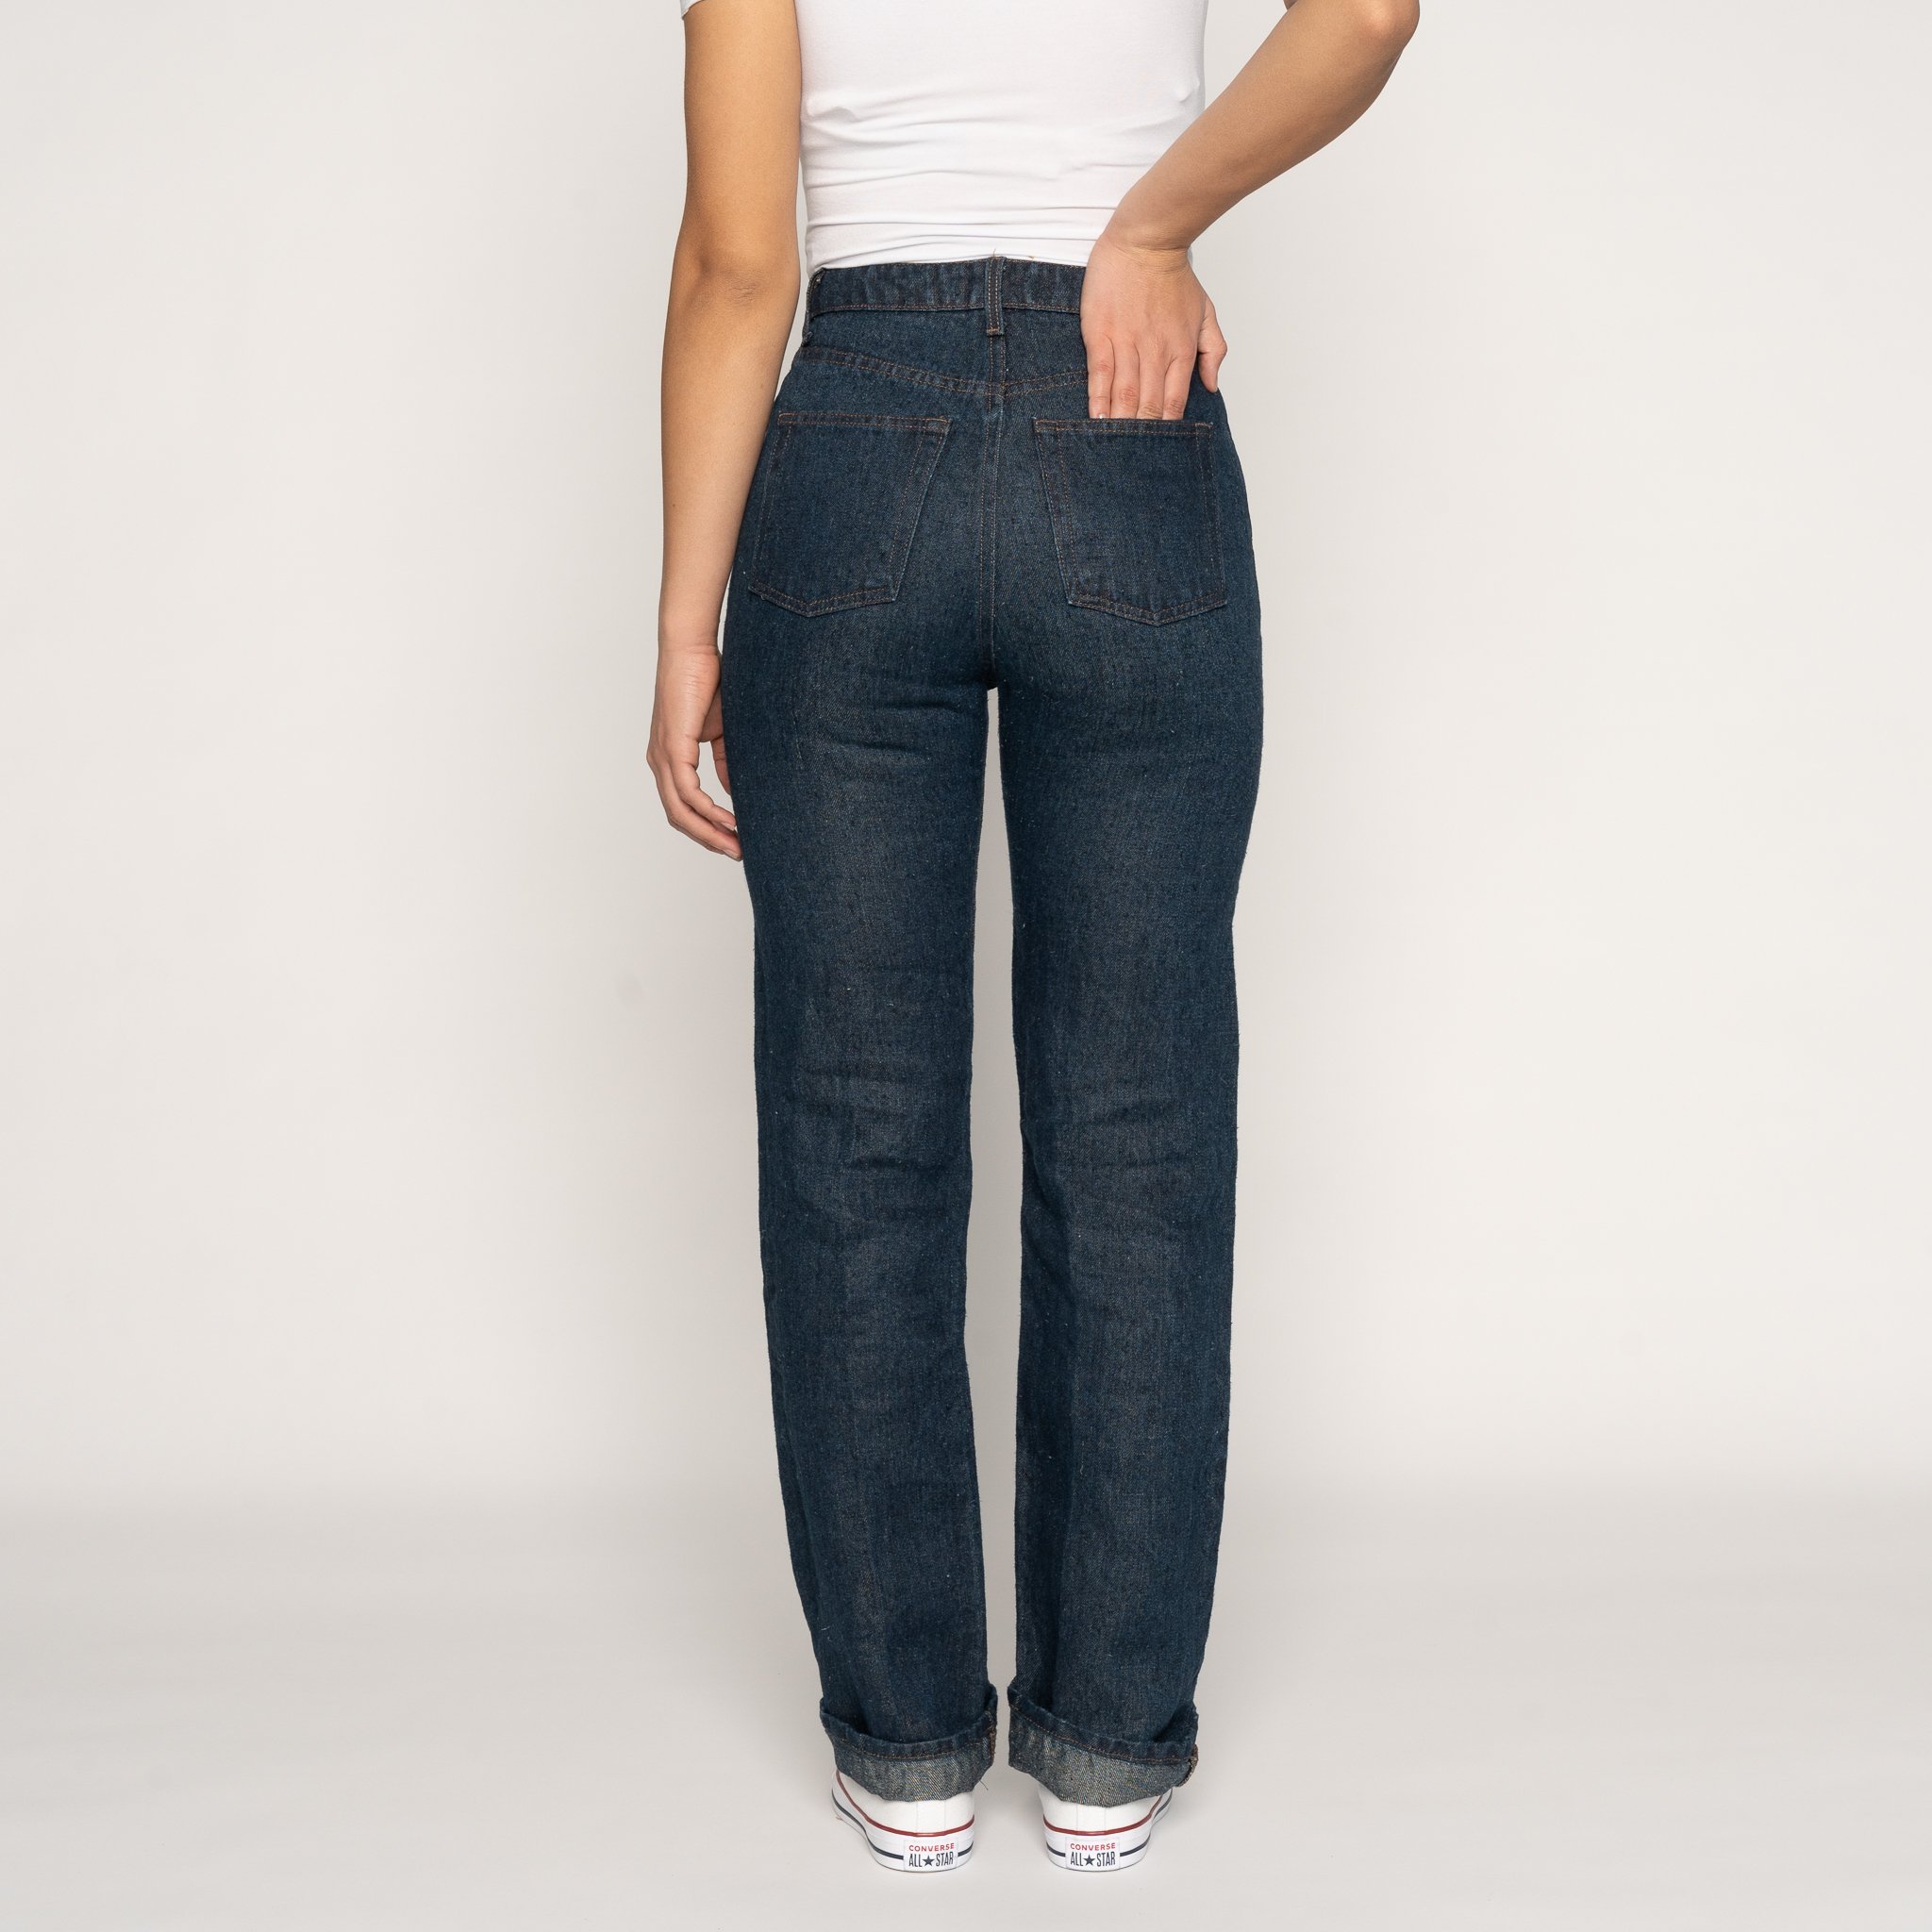  Women’s Pure Hemp Denim Jeans  